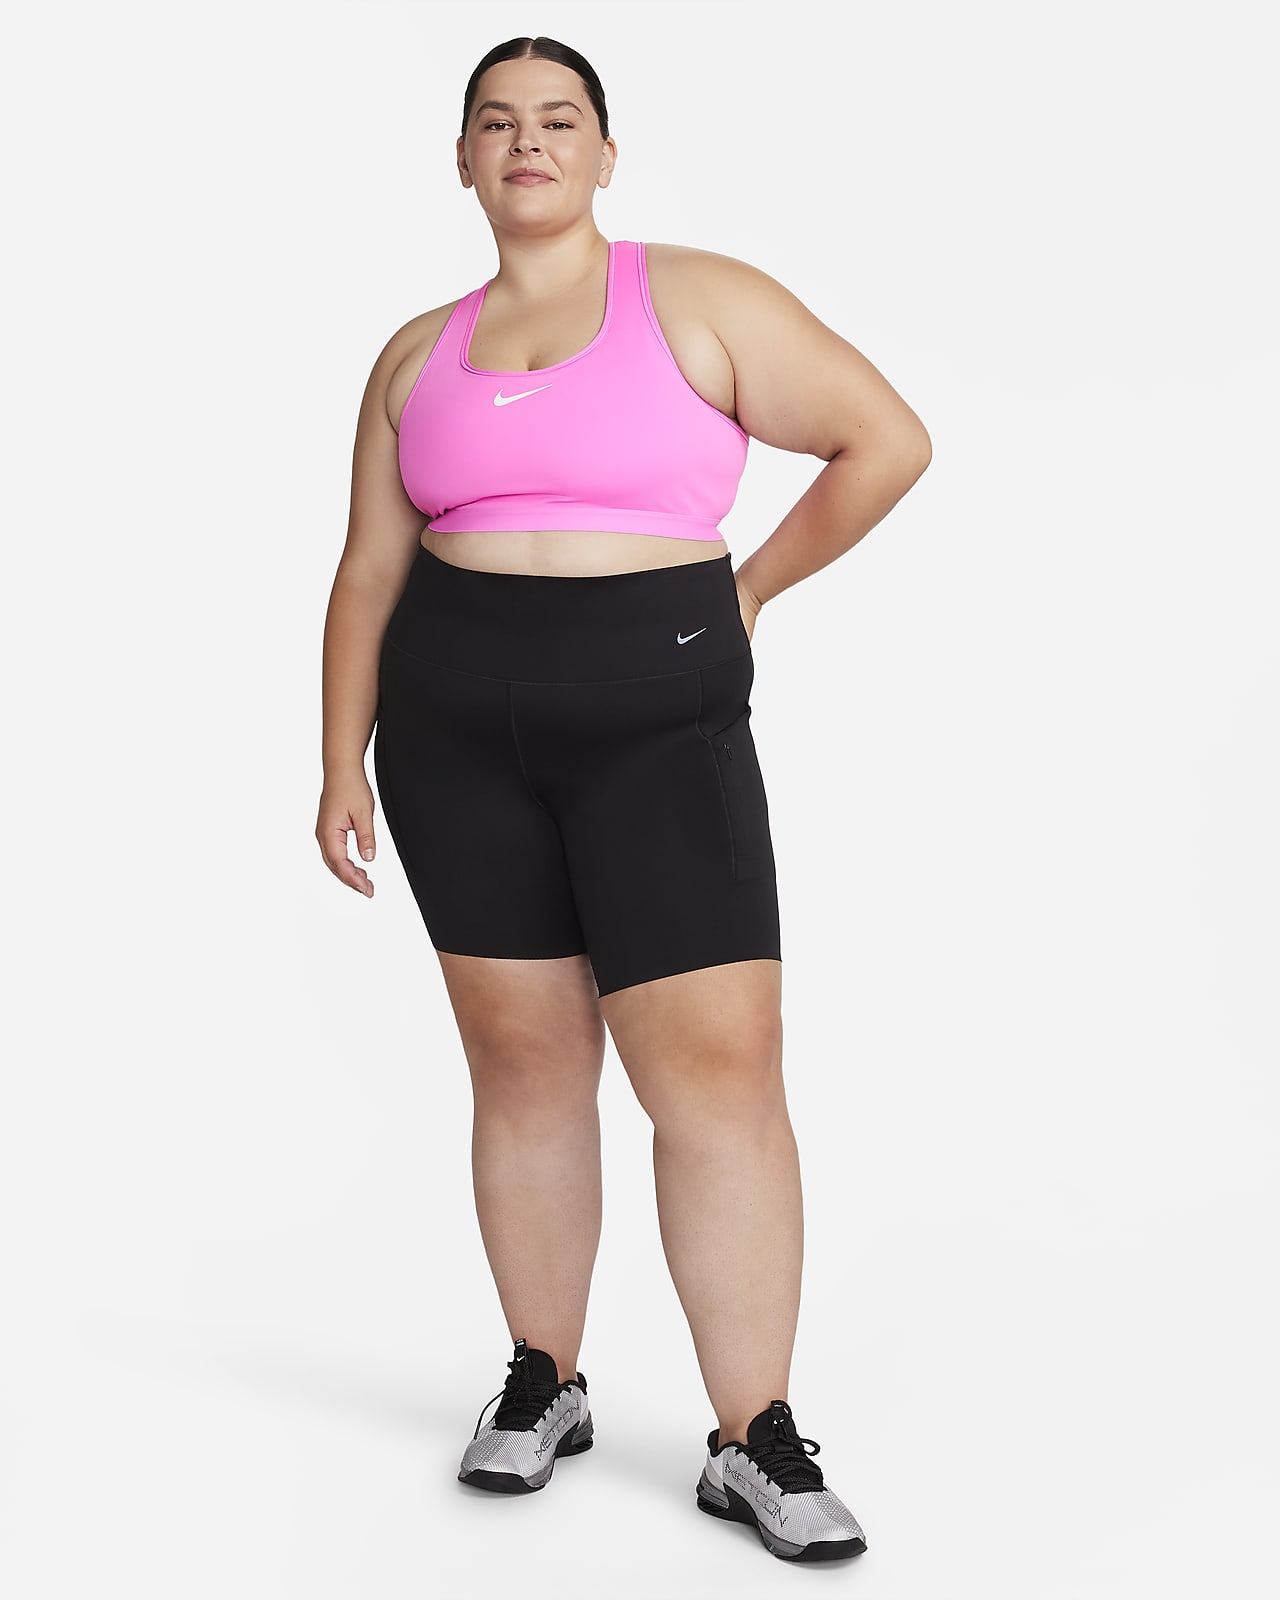 Nike Rival Women’s Plus Size Sports Bra Size 32F High Support Black